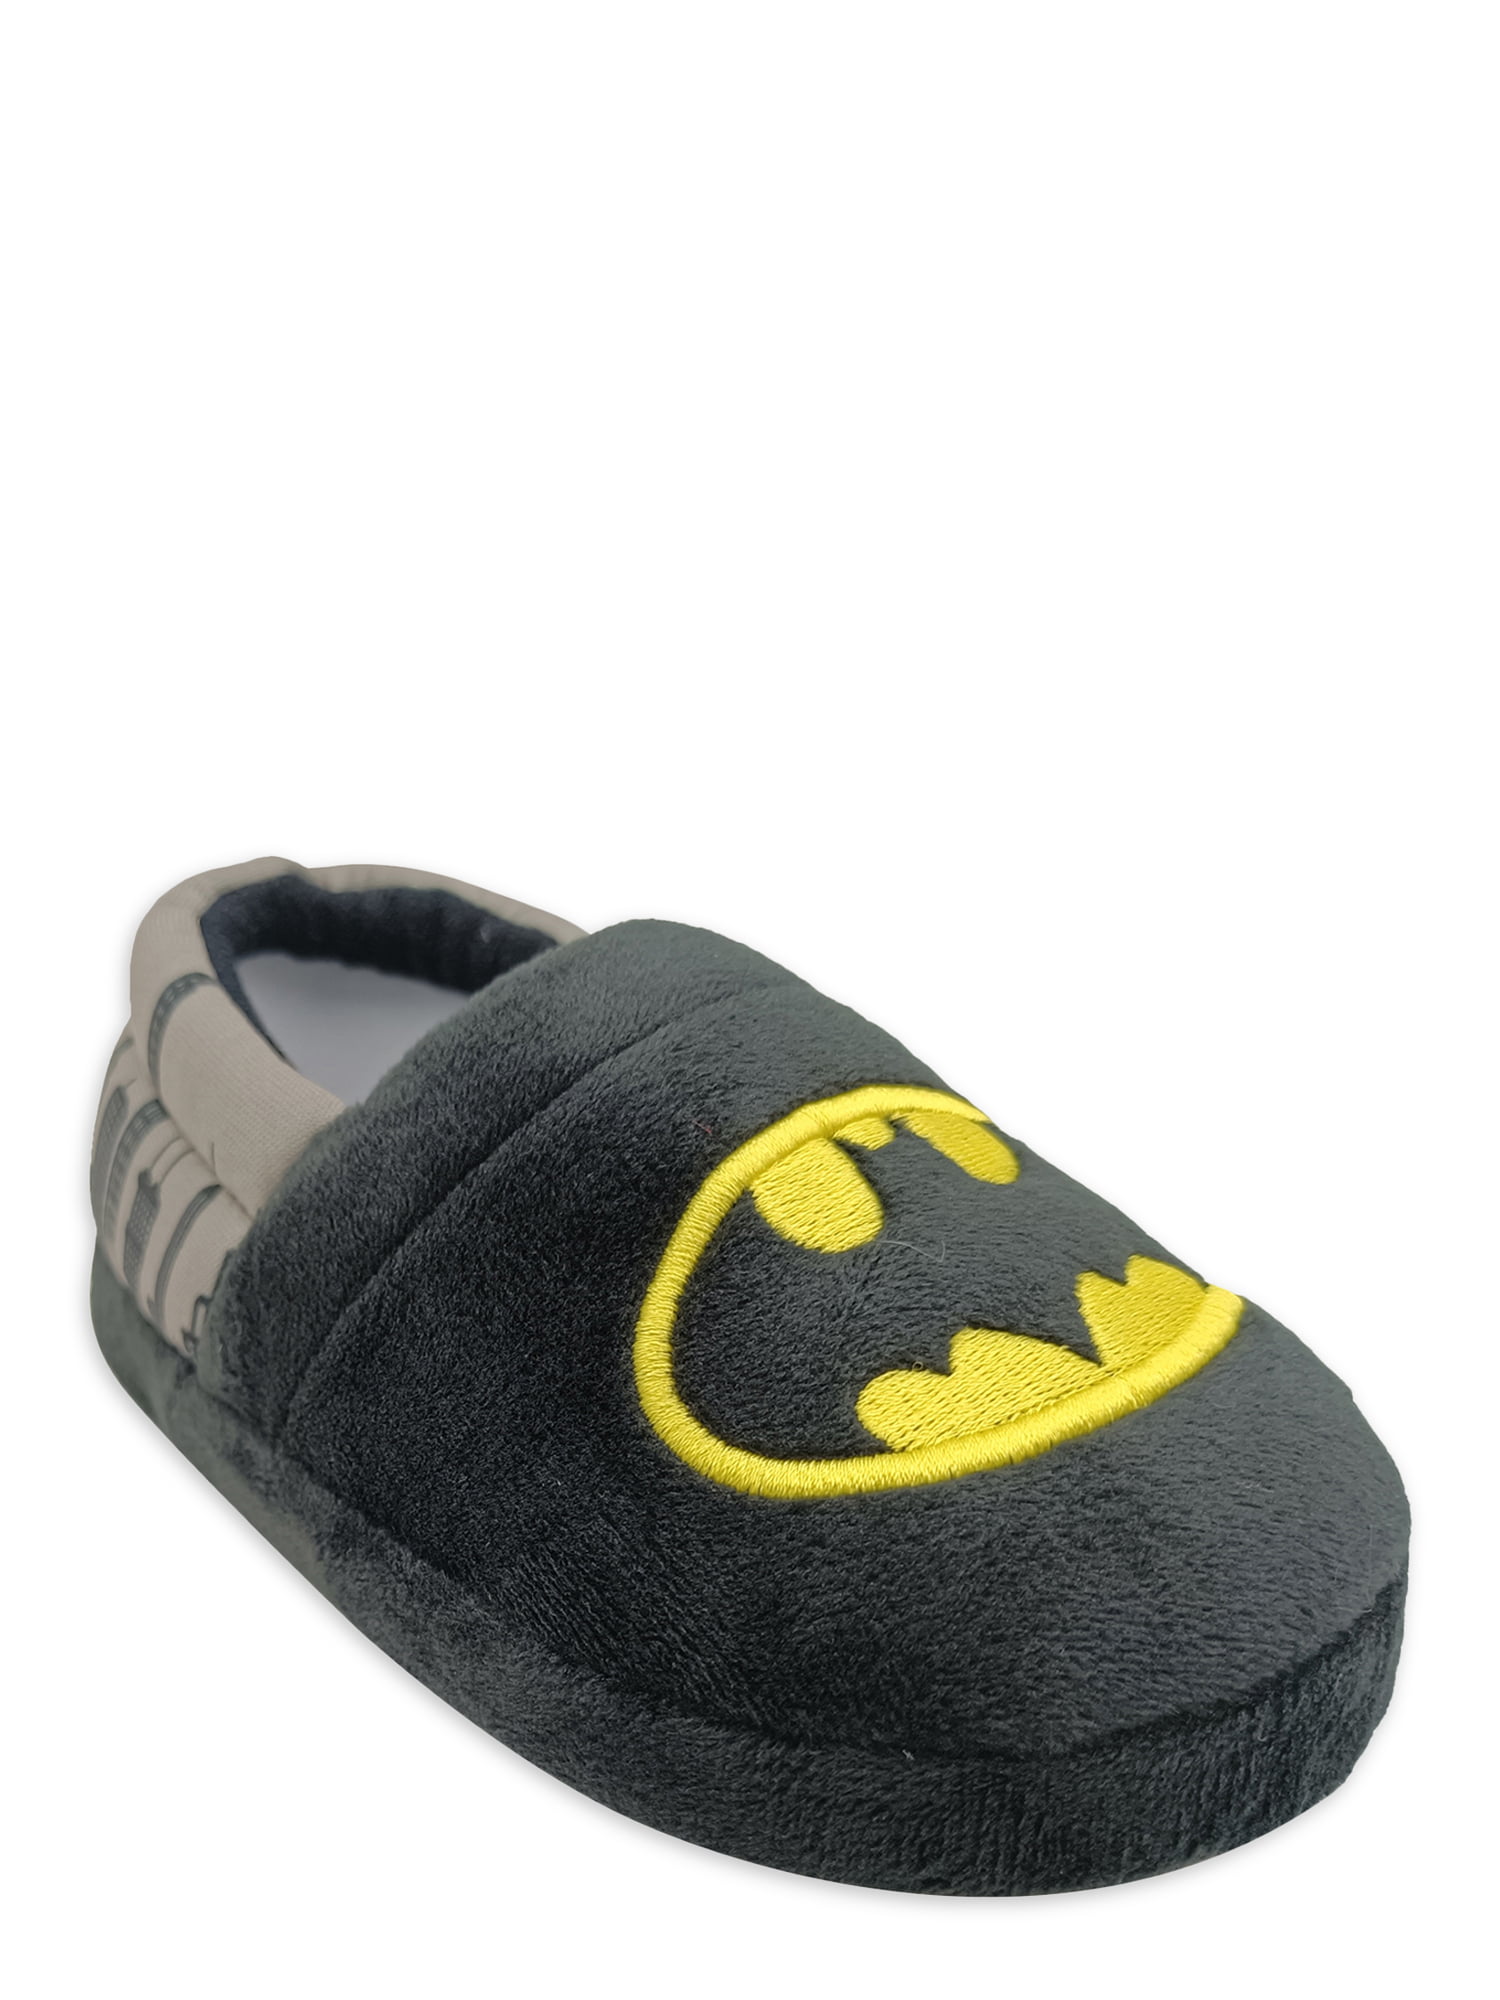 Batman - Boys Batman Licensed Slipper (Toddler & Youth) - Walmart.com ...